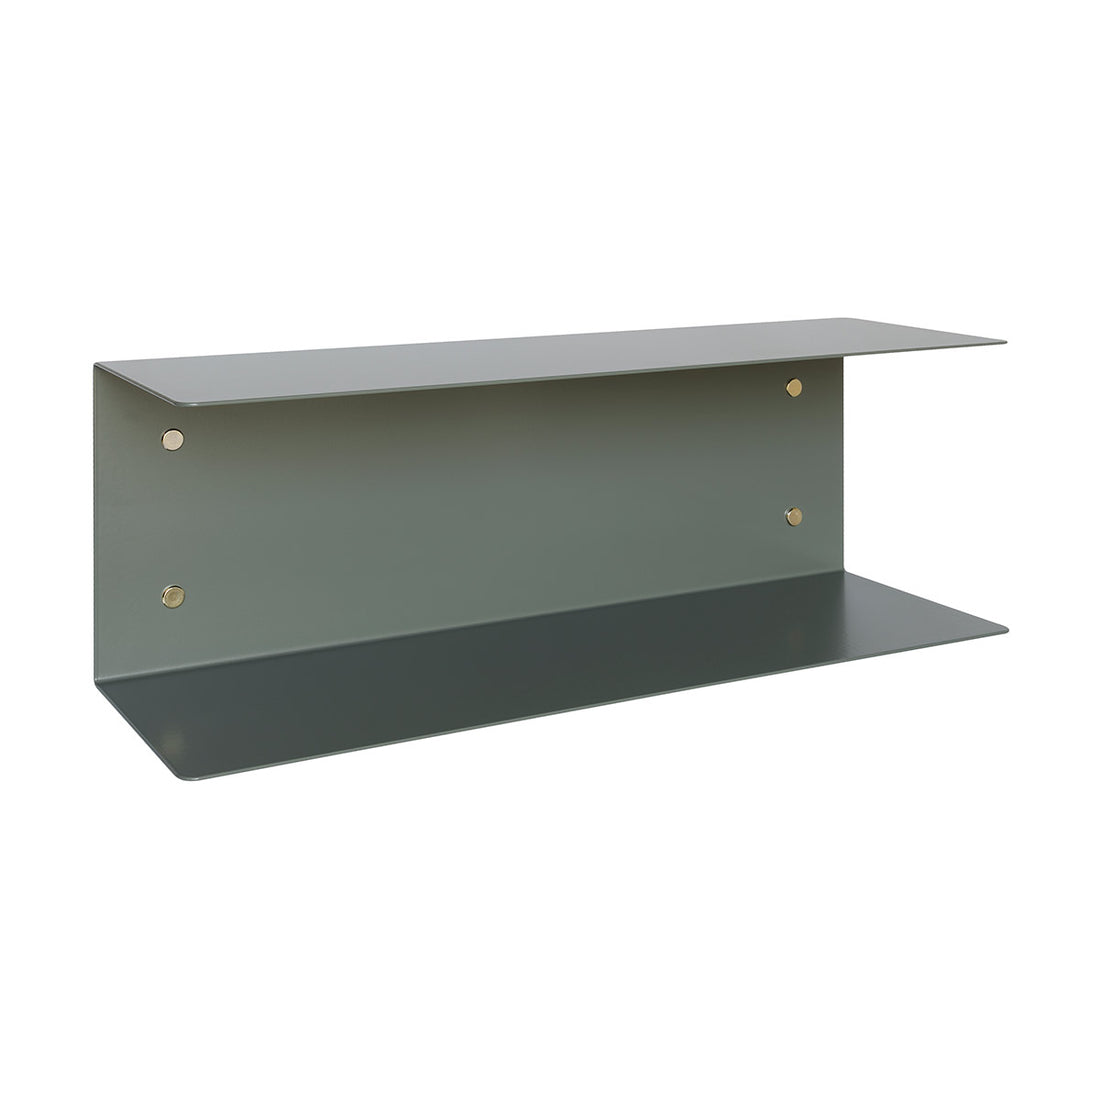 Detail Metal Shelf in Gray Green - 60 cm